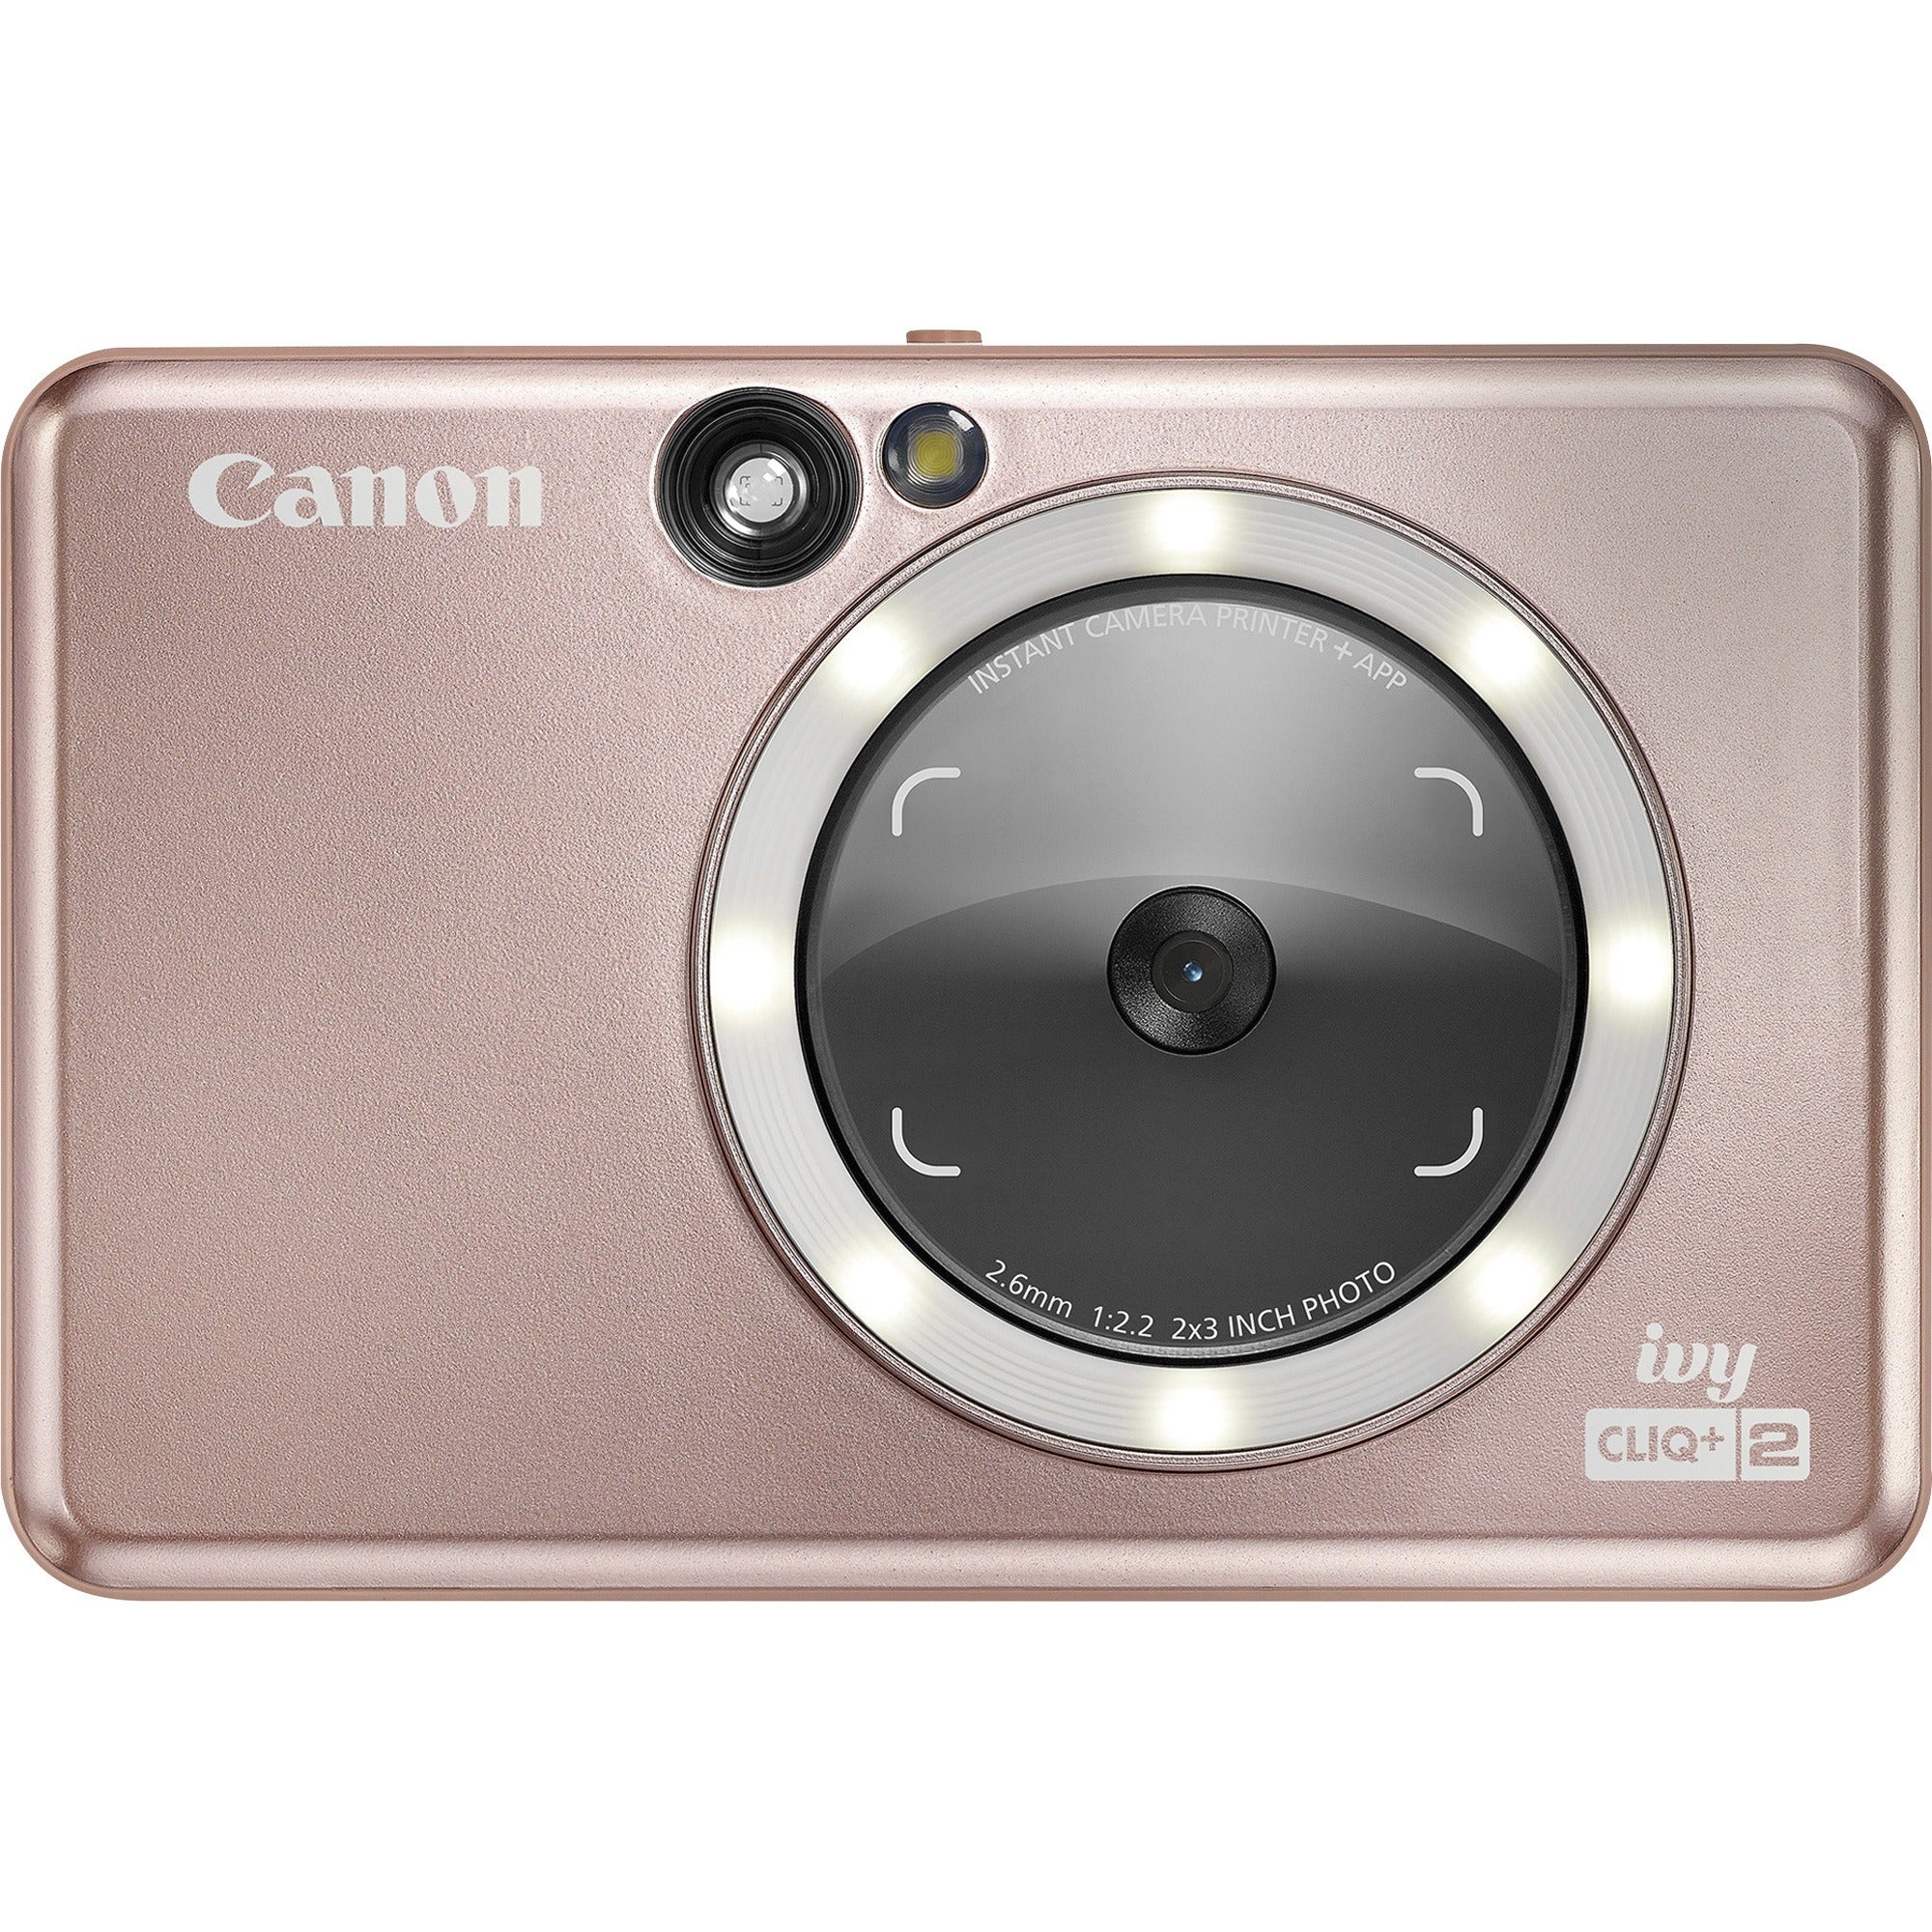 canon-ivy-cliq+2-8-megapixel-instant-digital-camera-rose-gold-autofocus-optical-viewfinder_cnmcliq2rose - 1